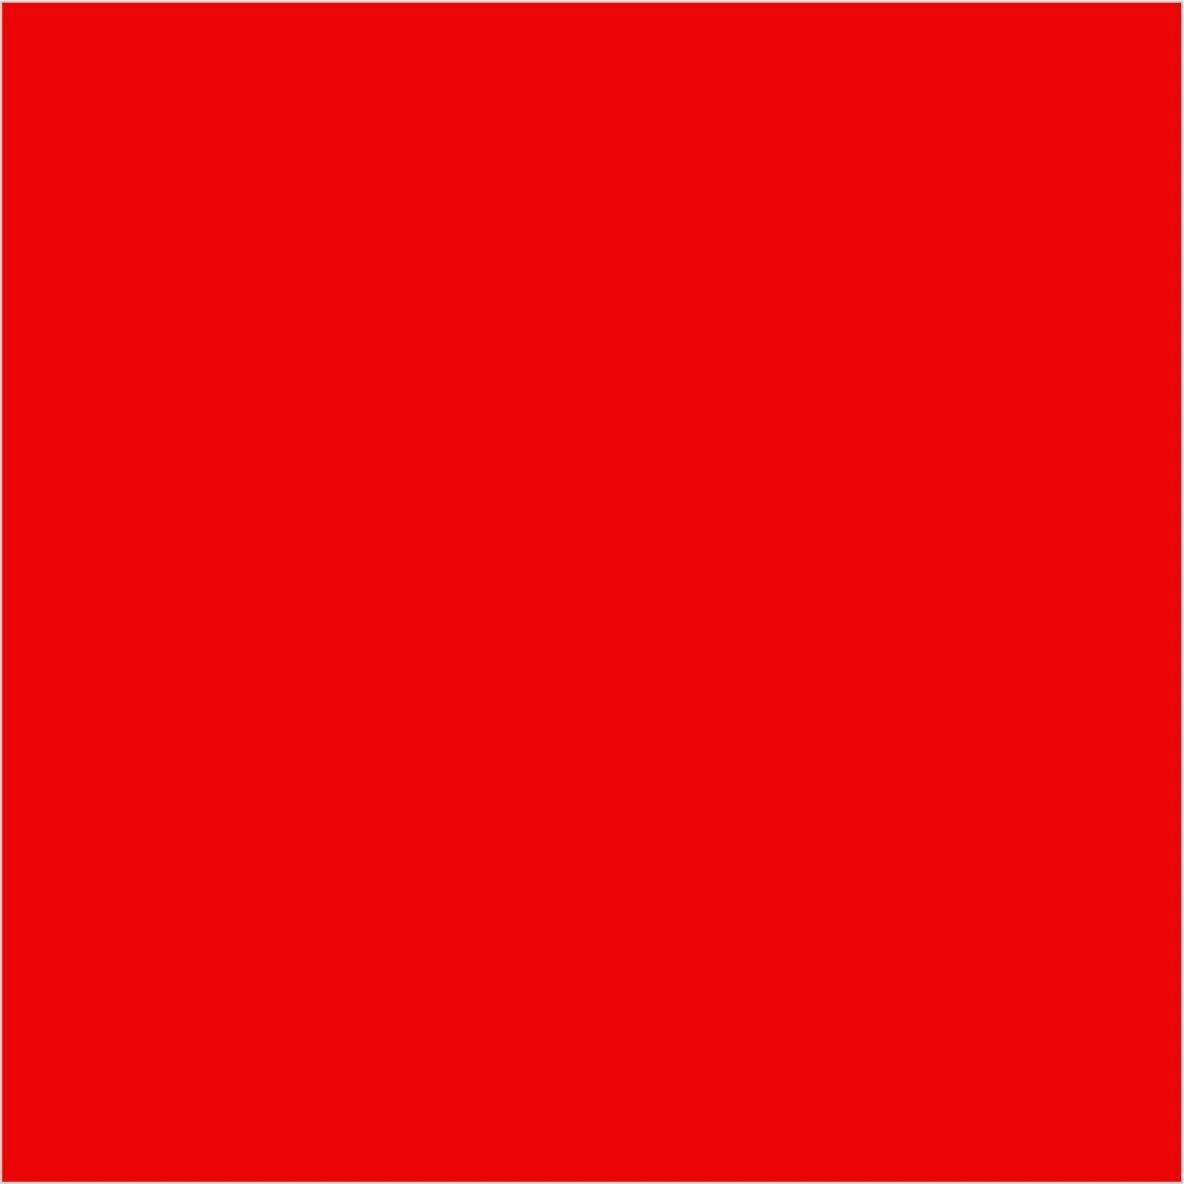 Сайт красный квадрат. RAL 3020 Traffic Red. Красный квадрат. Красный цвет. Красный квадратик.